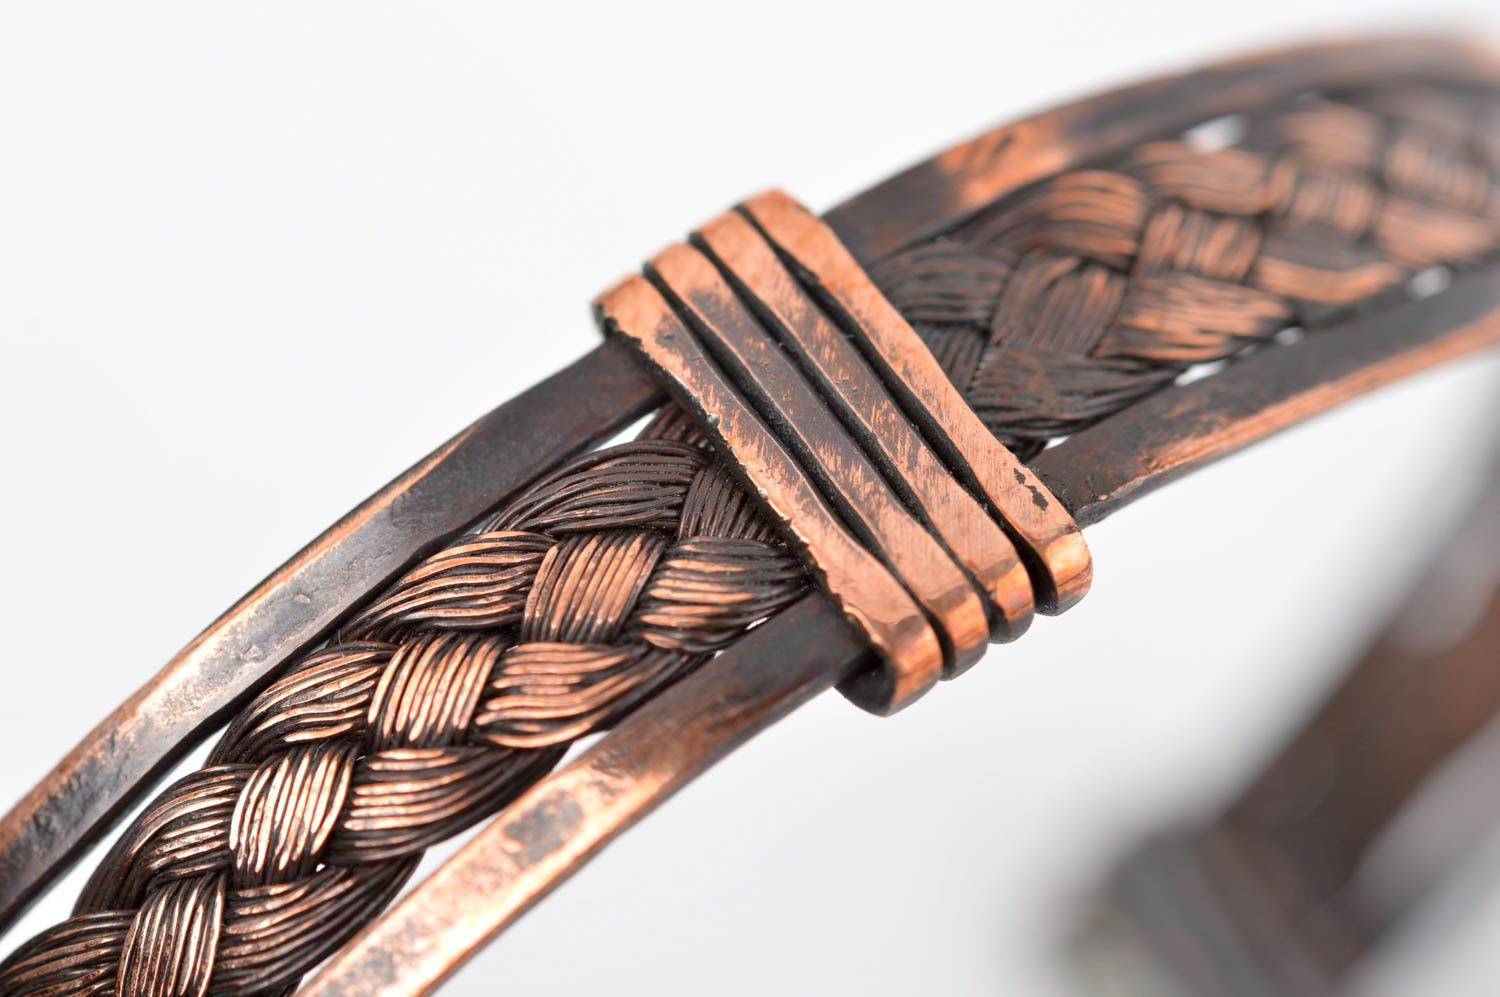 Unusual handmade wrist bracelet metal bracelet designs metal craft ideas photo 5